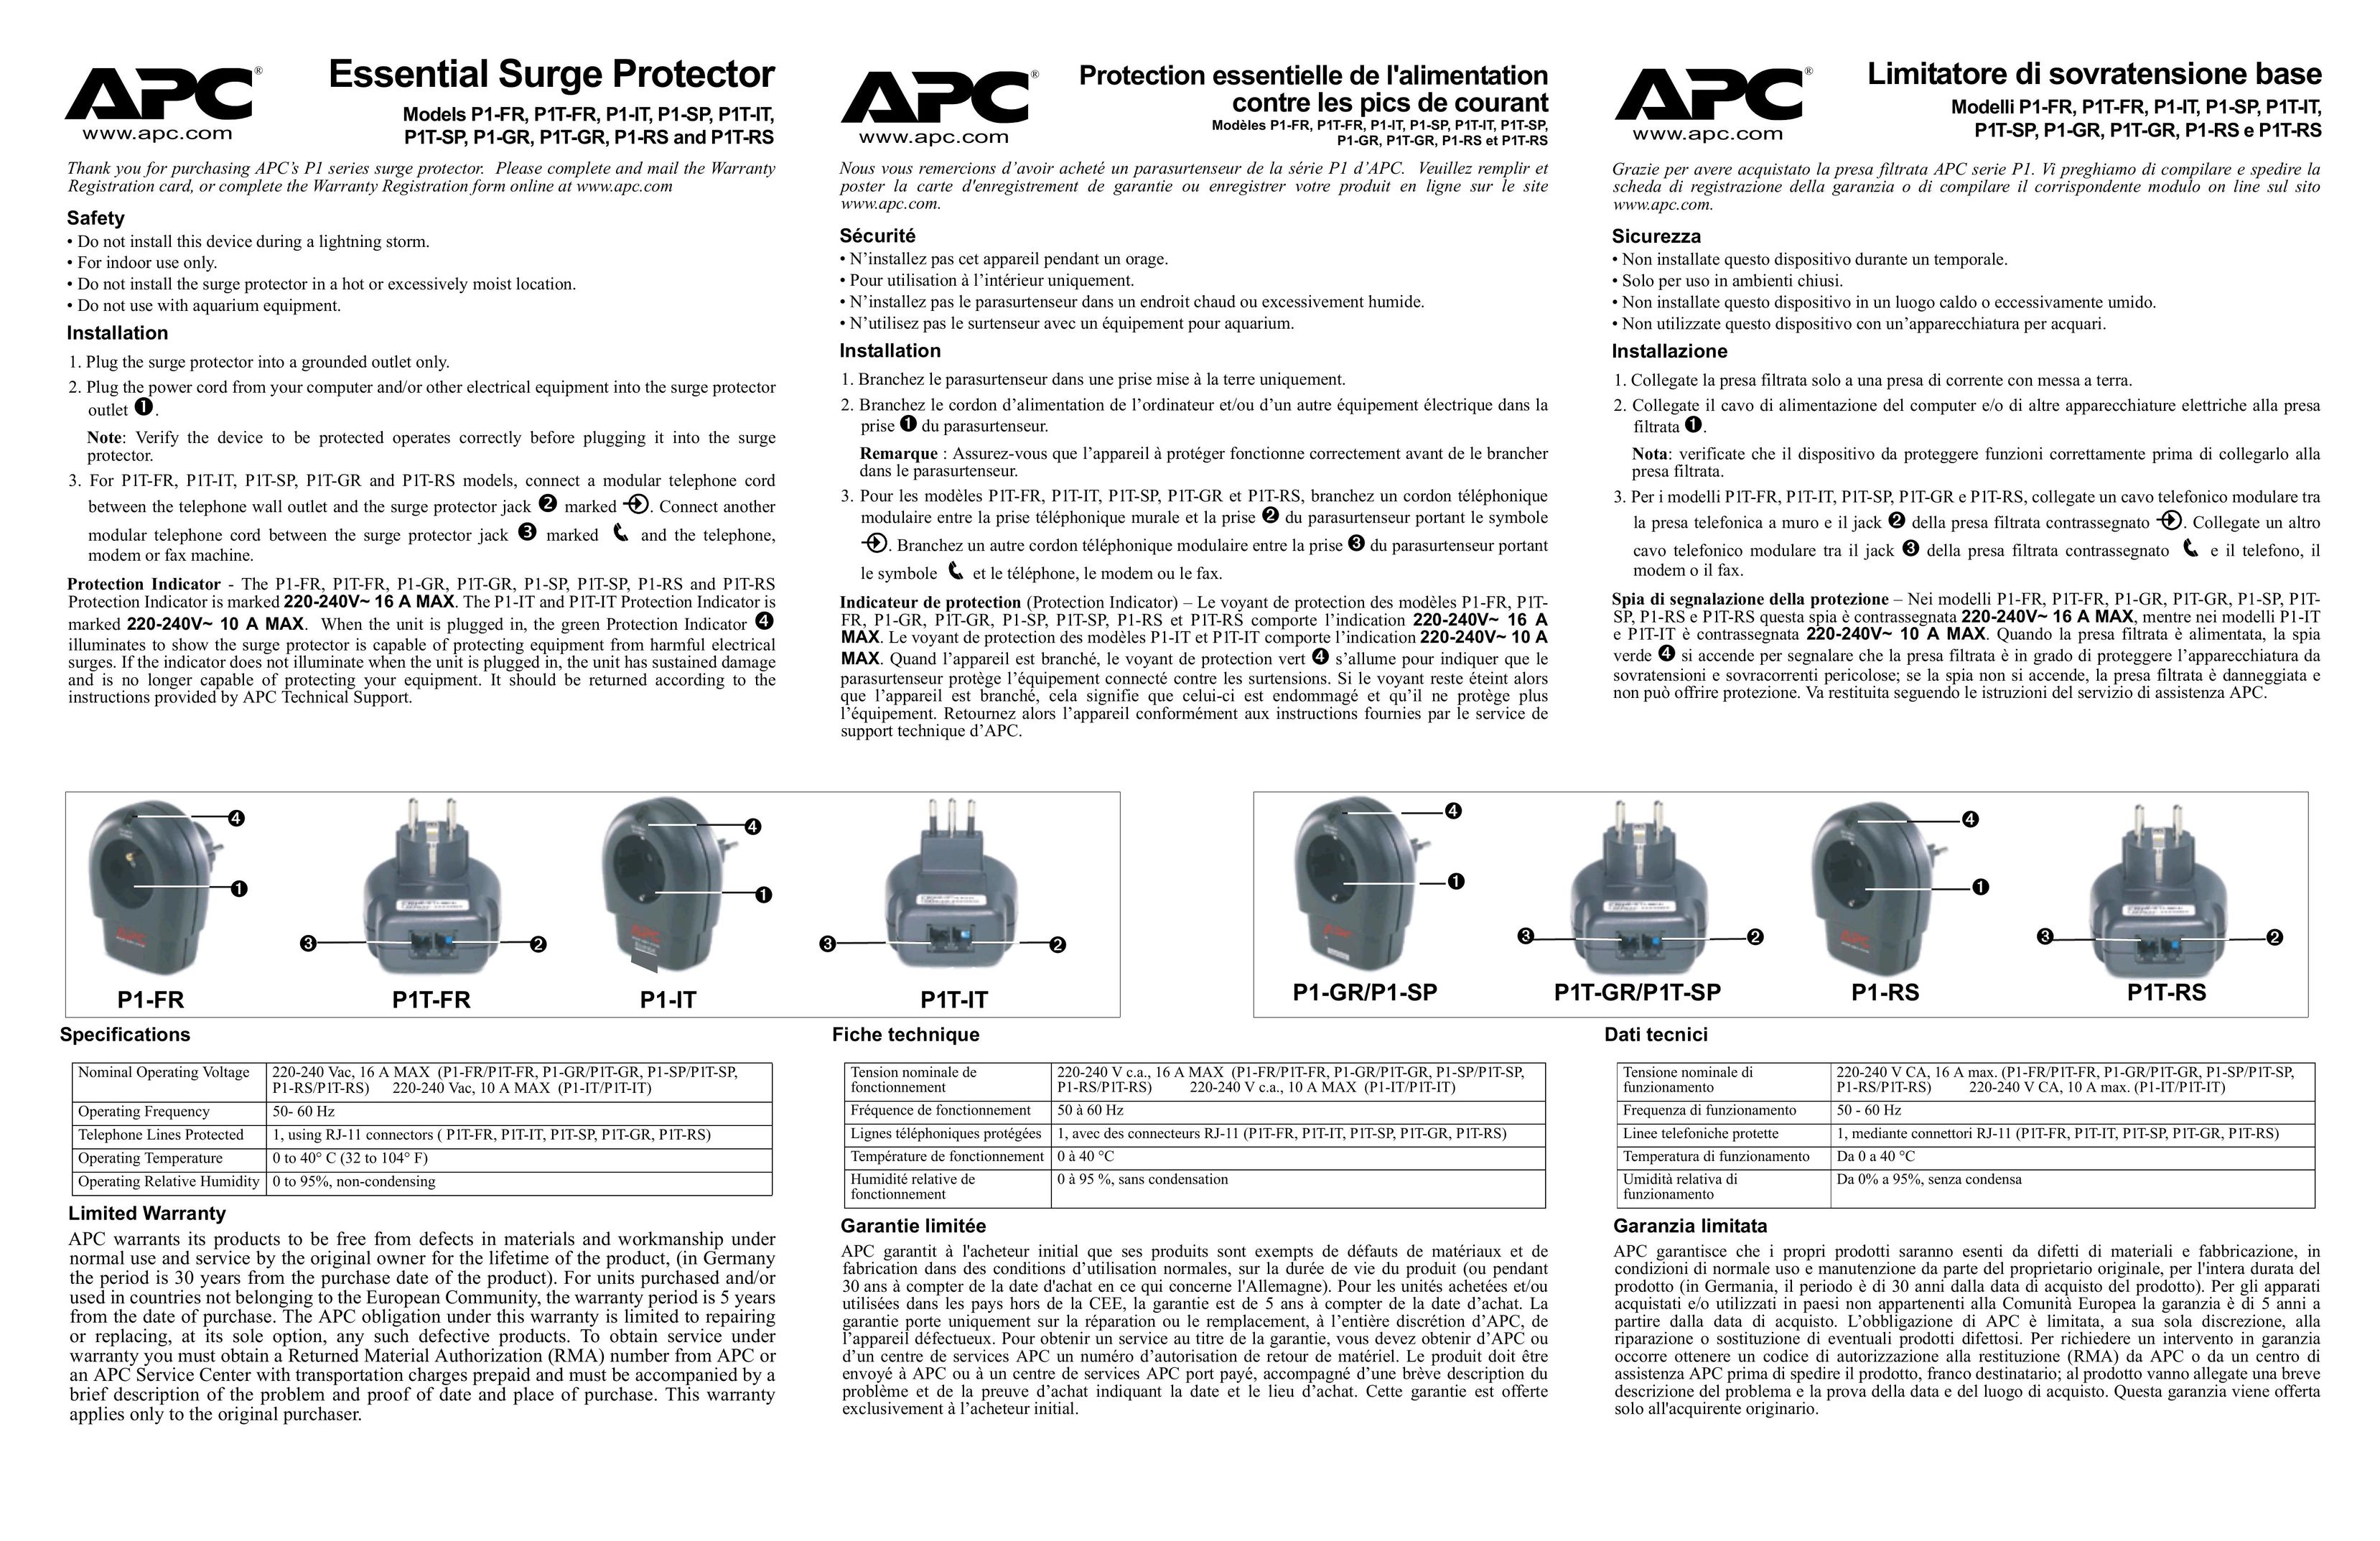 APC P1-RS Surge Protector User Manual